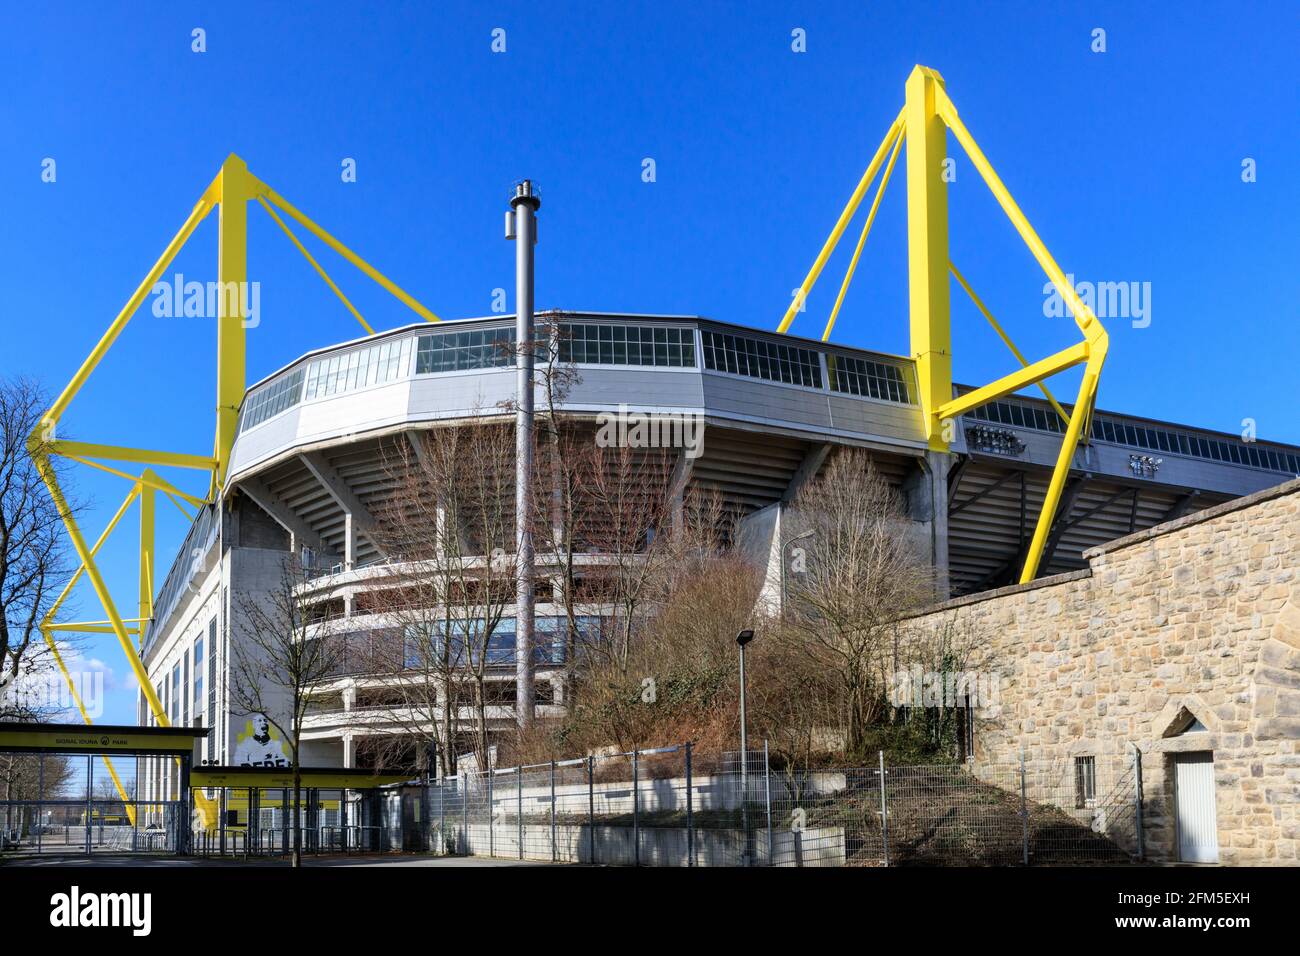 Signal Iduna Park, Borussia Dortmund football club BVB09 stadium arena exterior, Dortmund, Germany Stock Photo